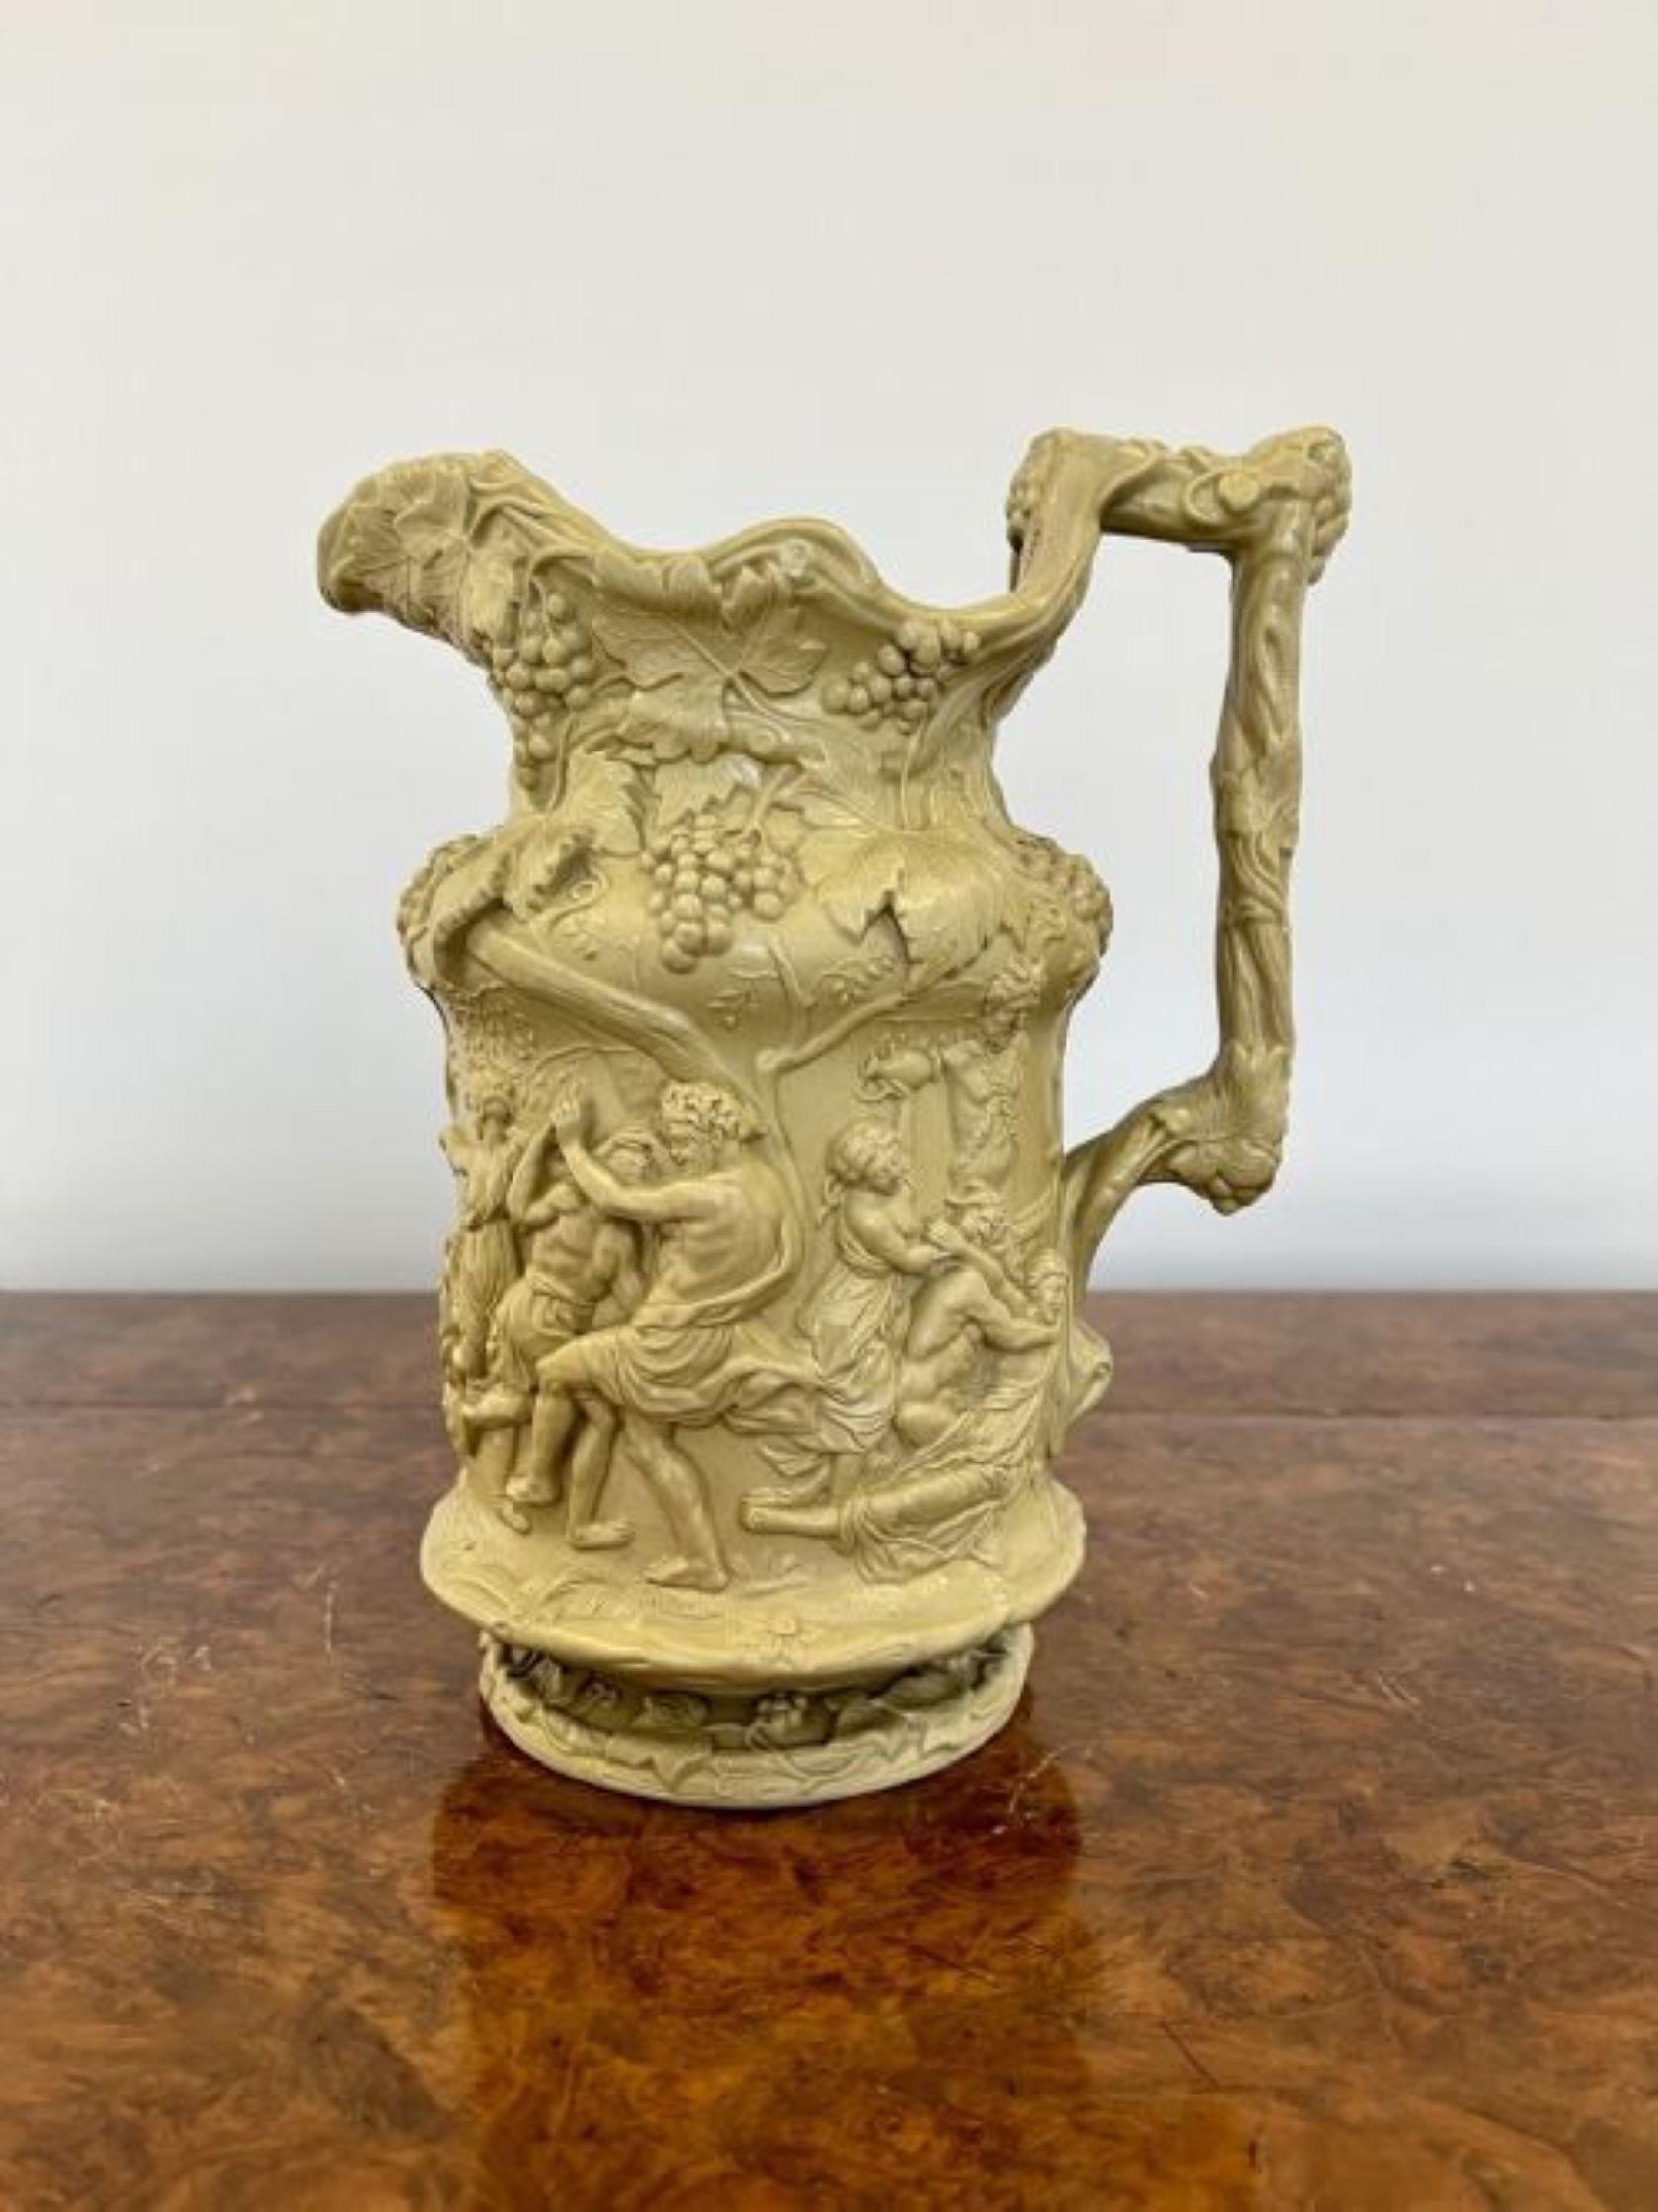 Antique quality relief moulded jug, having a quality relief moulded jug in the Bacchanalian dance 

D. 1844